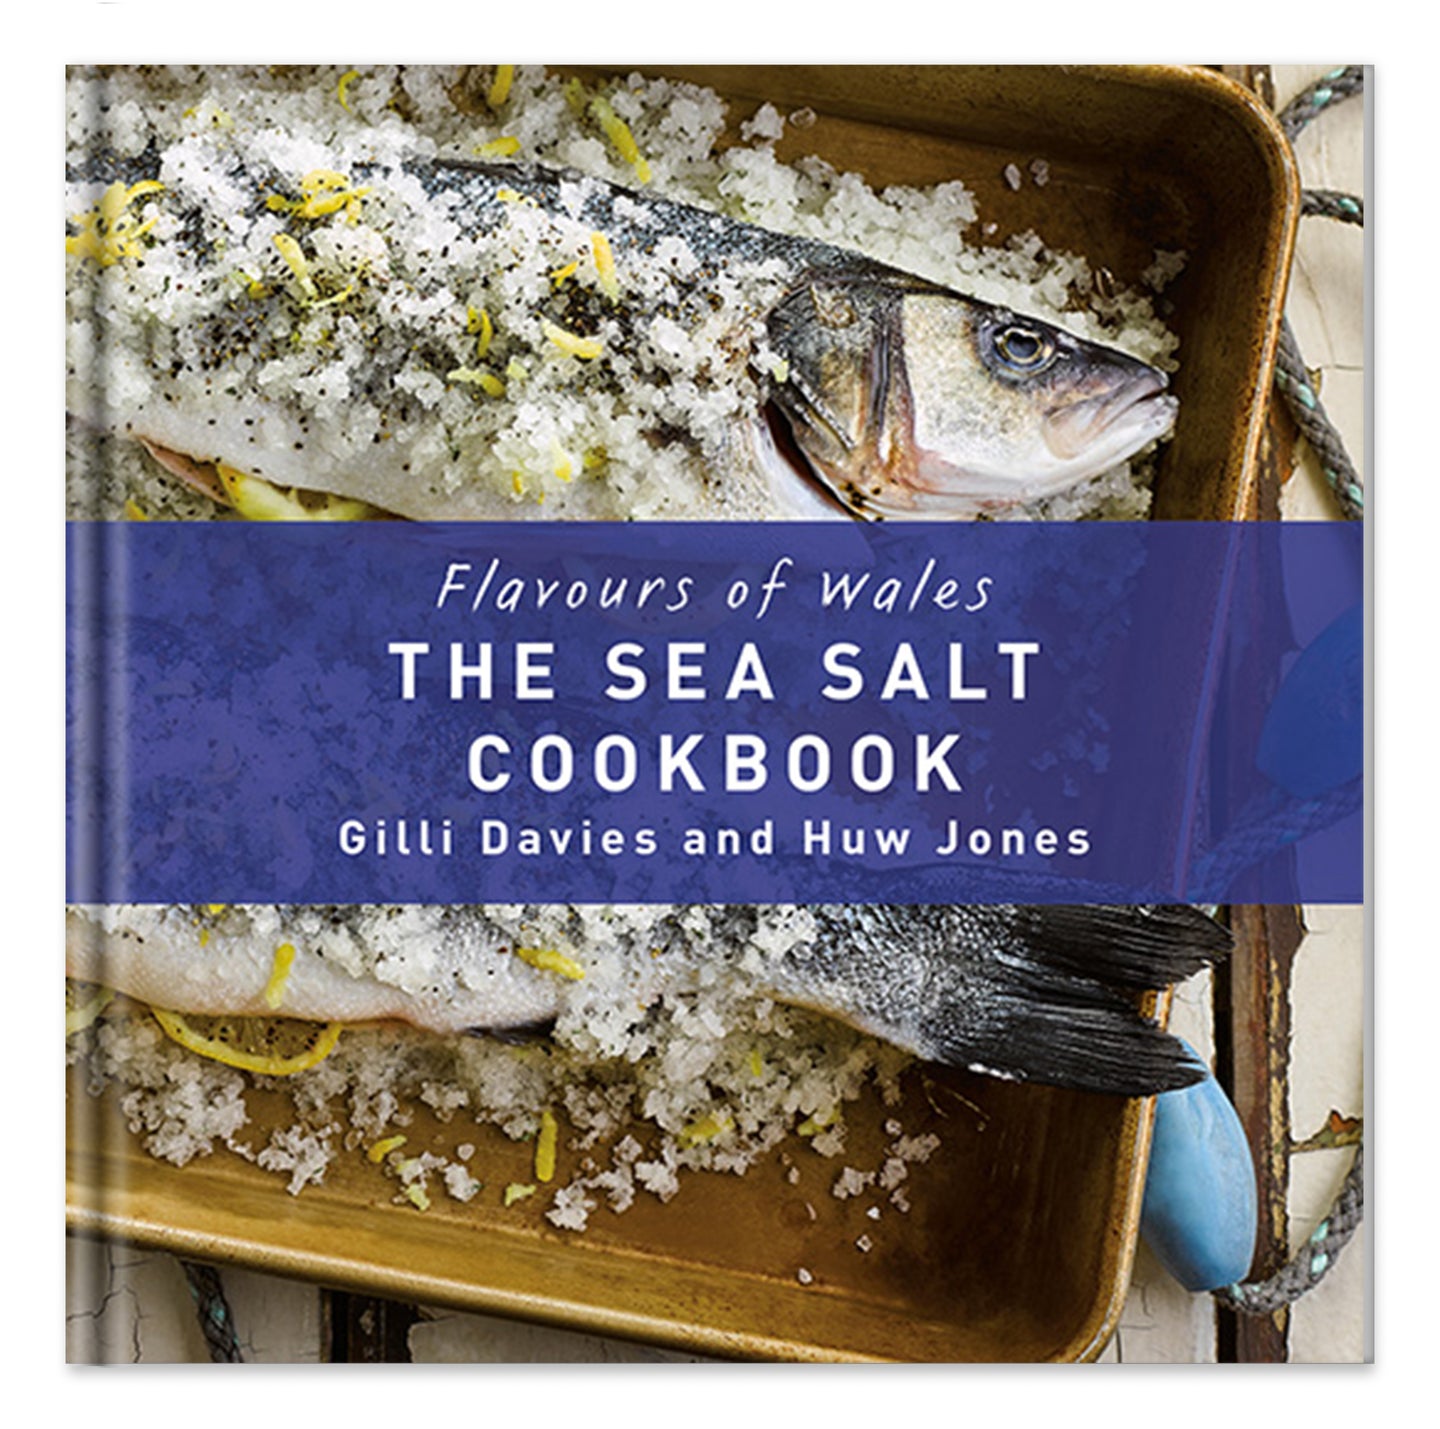 The Sea Salt Cookbook